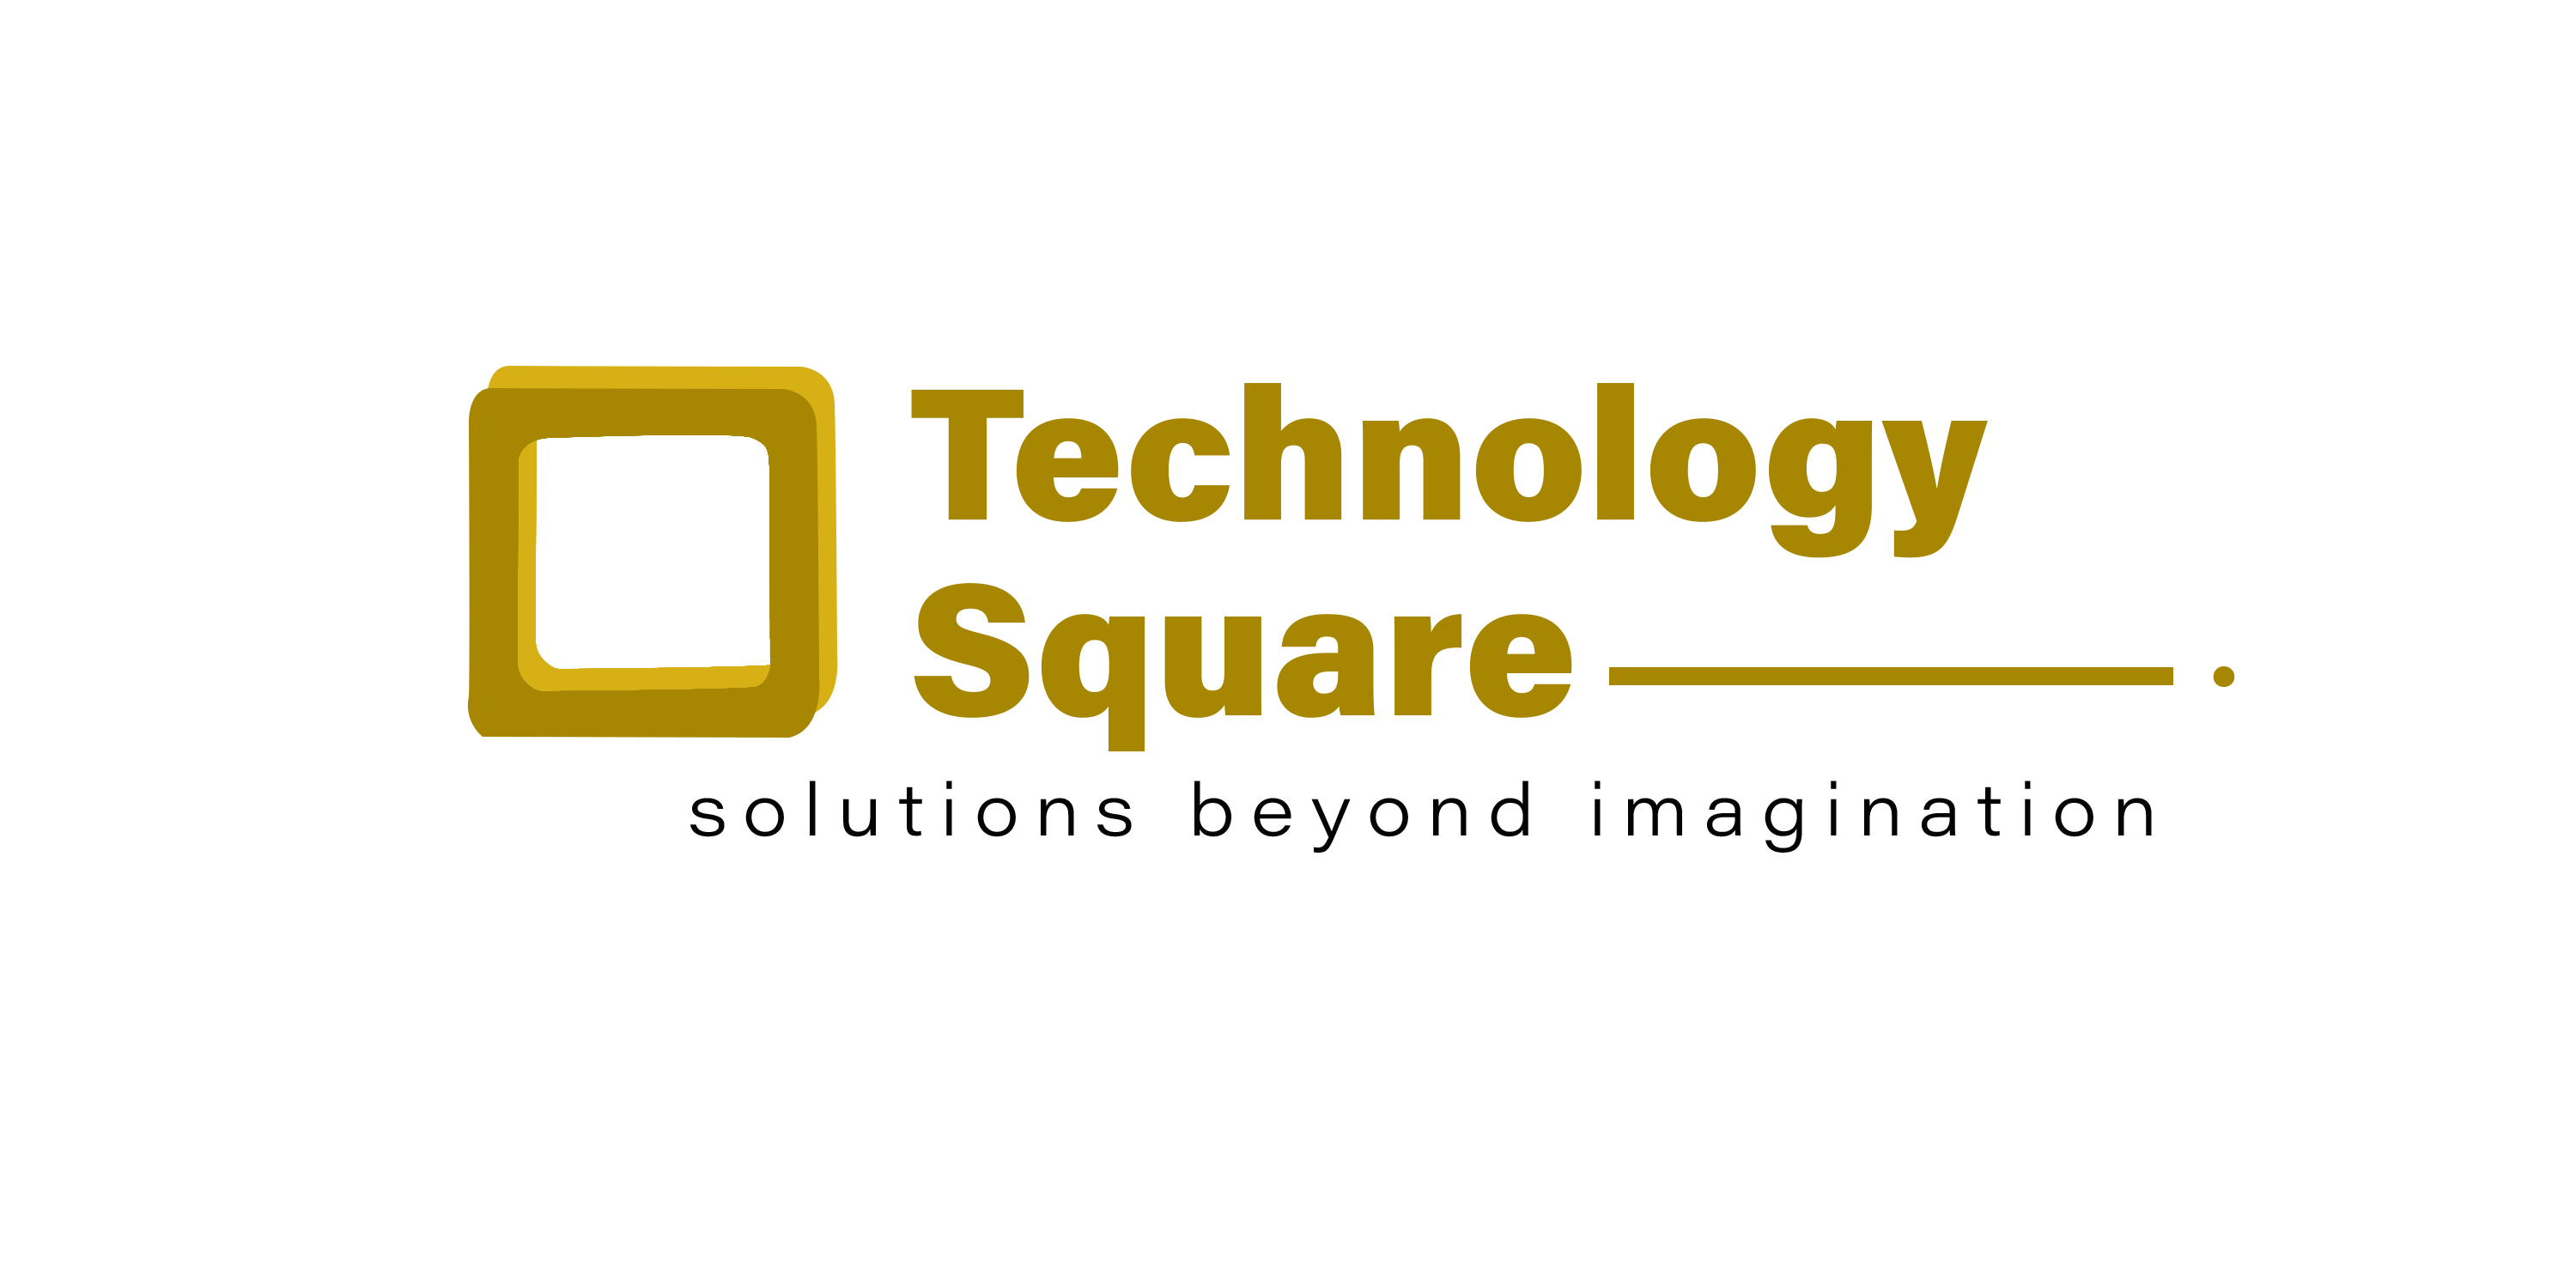 Technology Square